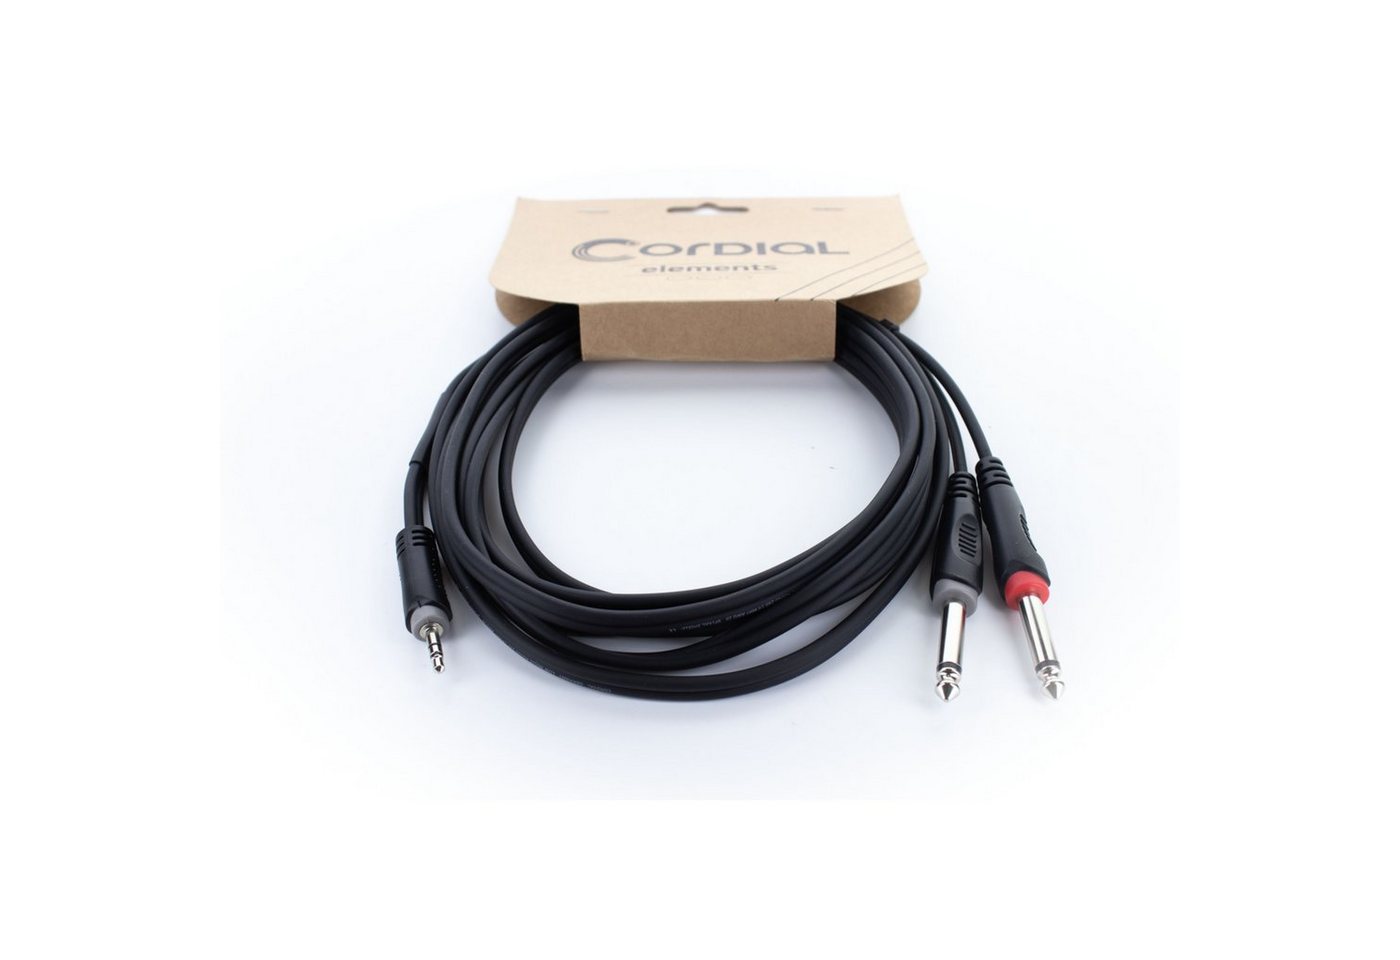 Cordial Audio-Kabel, EY 1 WPP Soundkartenkabel Klinke 1 m - Insertkabel von Cordial